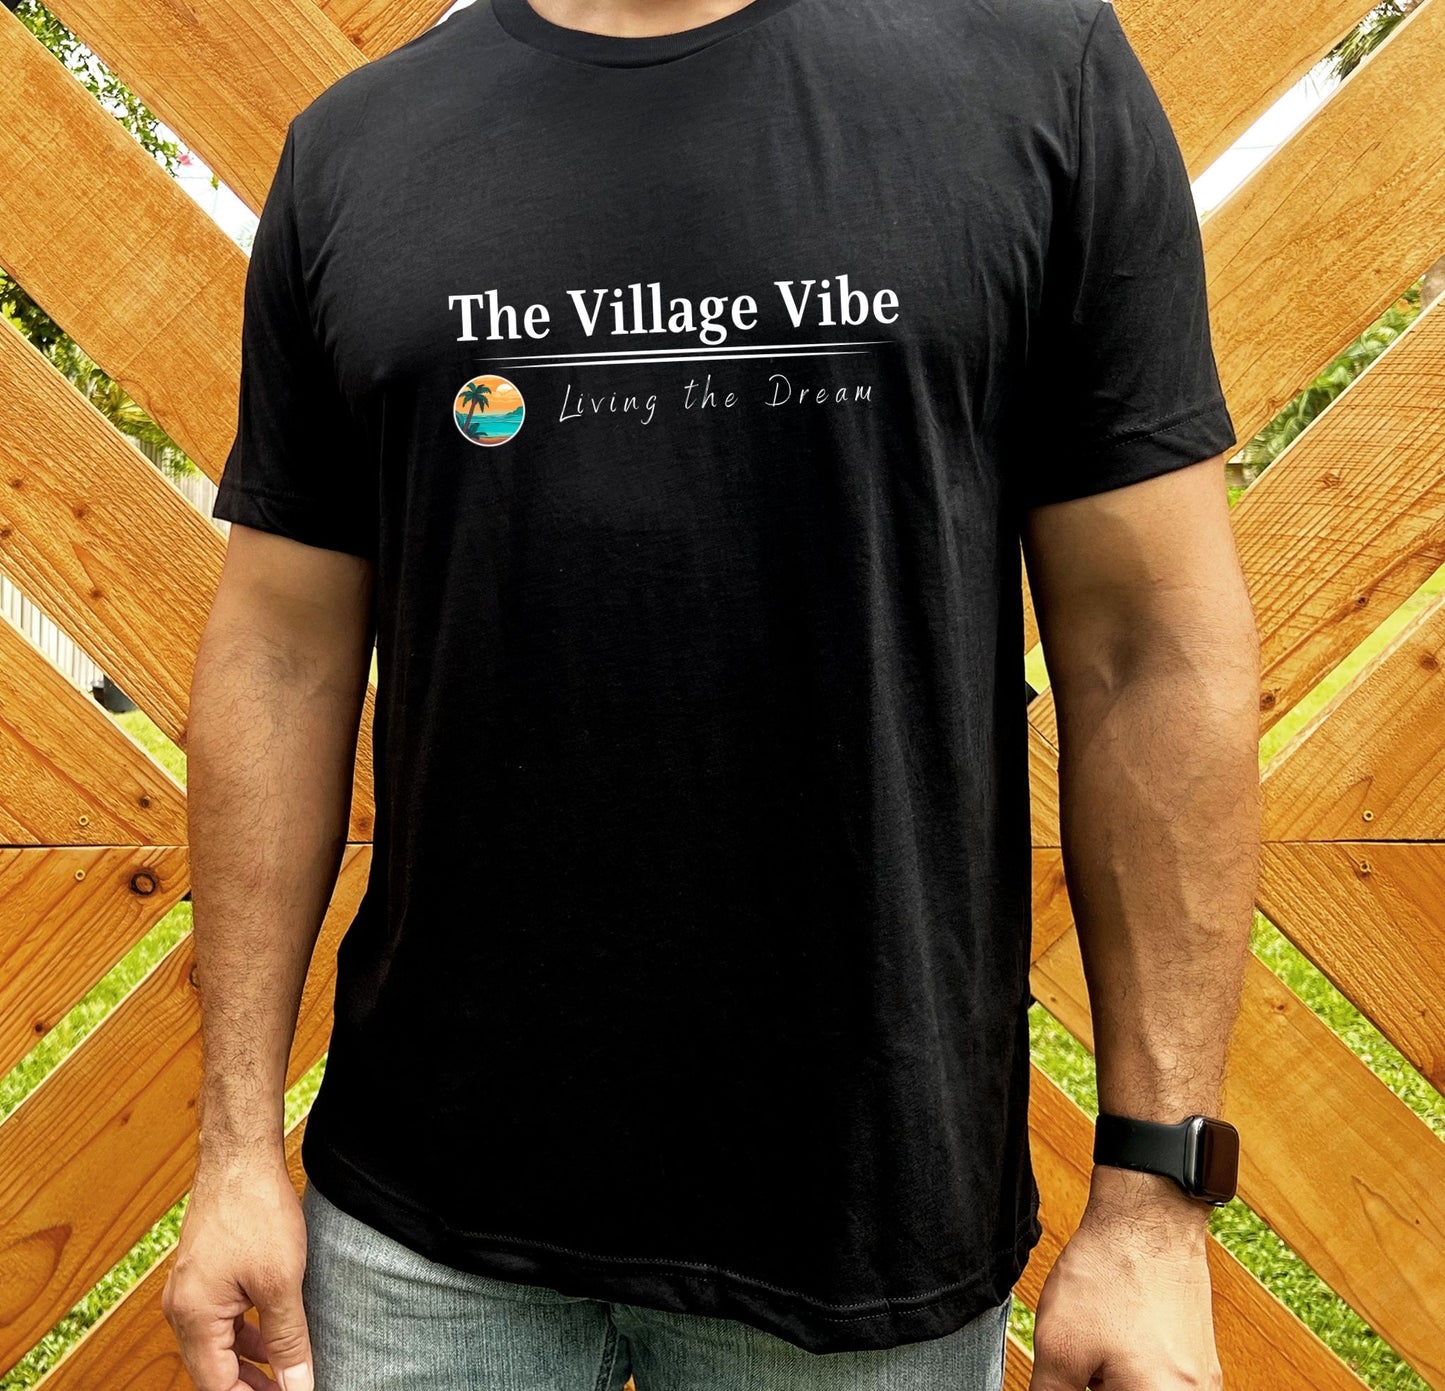 The Village Vibe T shirt Living The Dream!